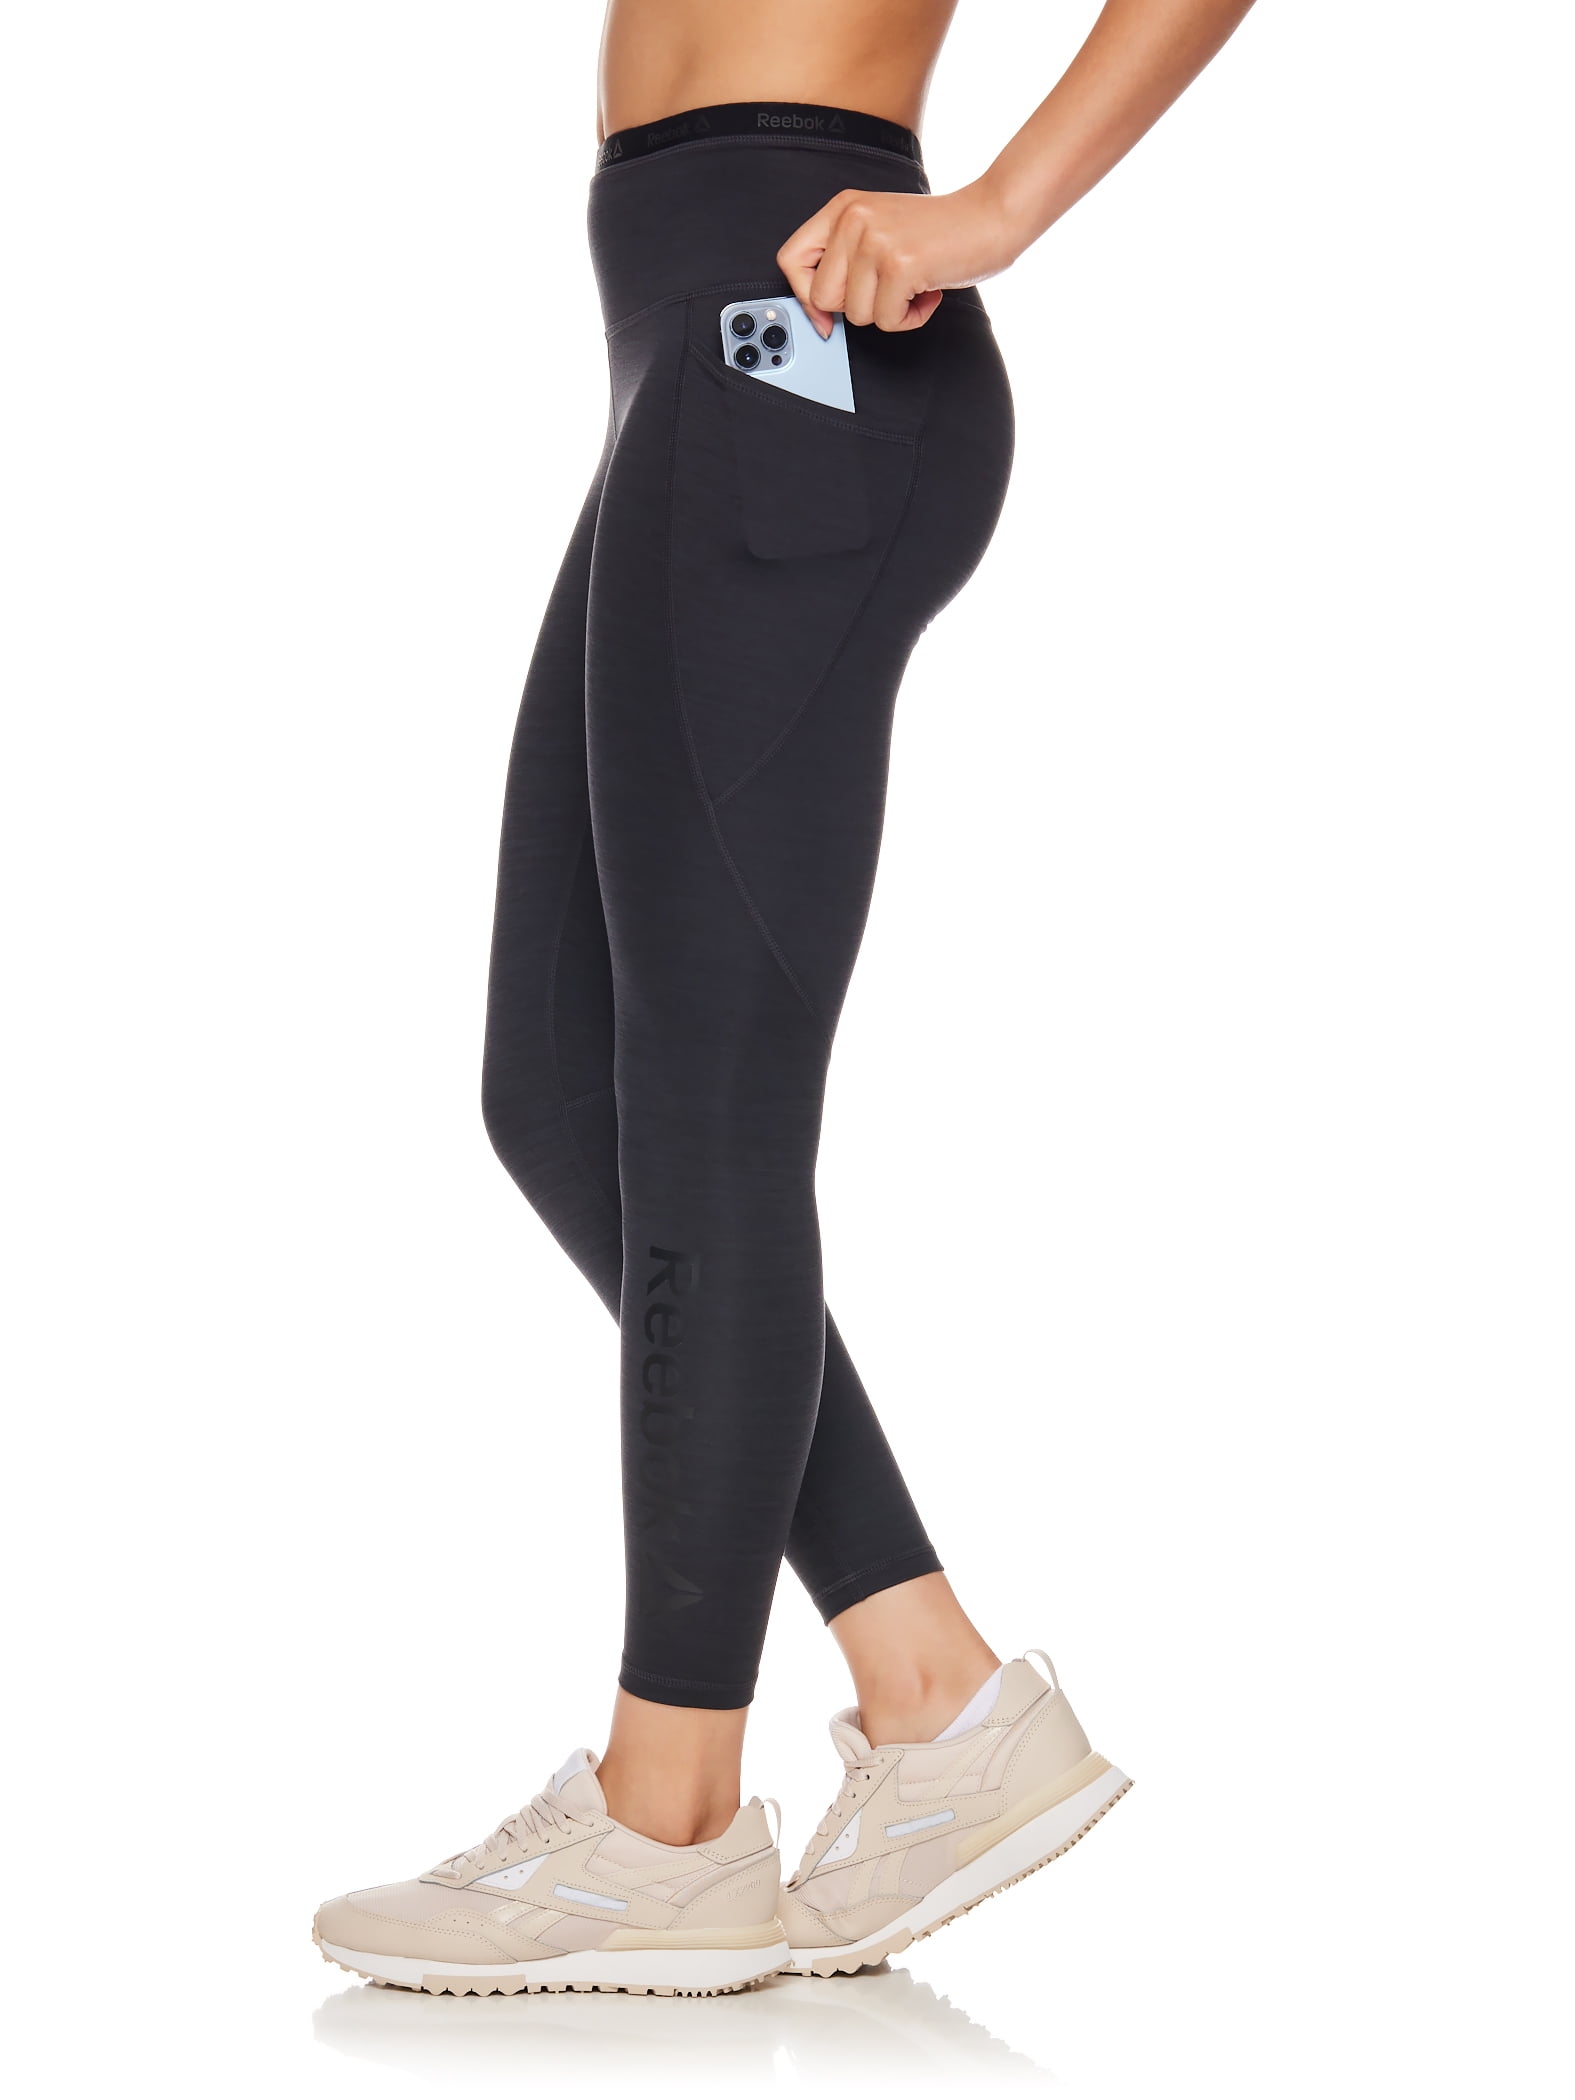 Bonds Women's Flex Legging - Black - Size L-XL